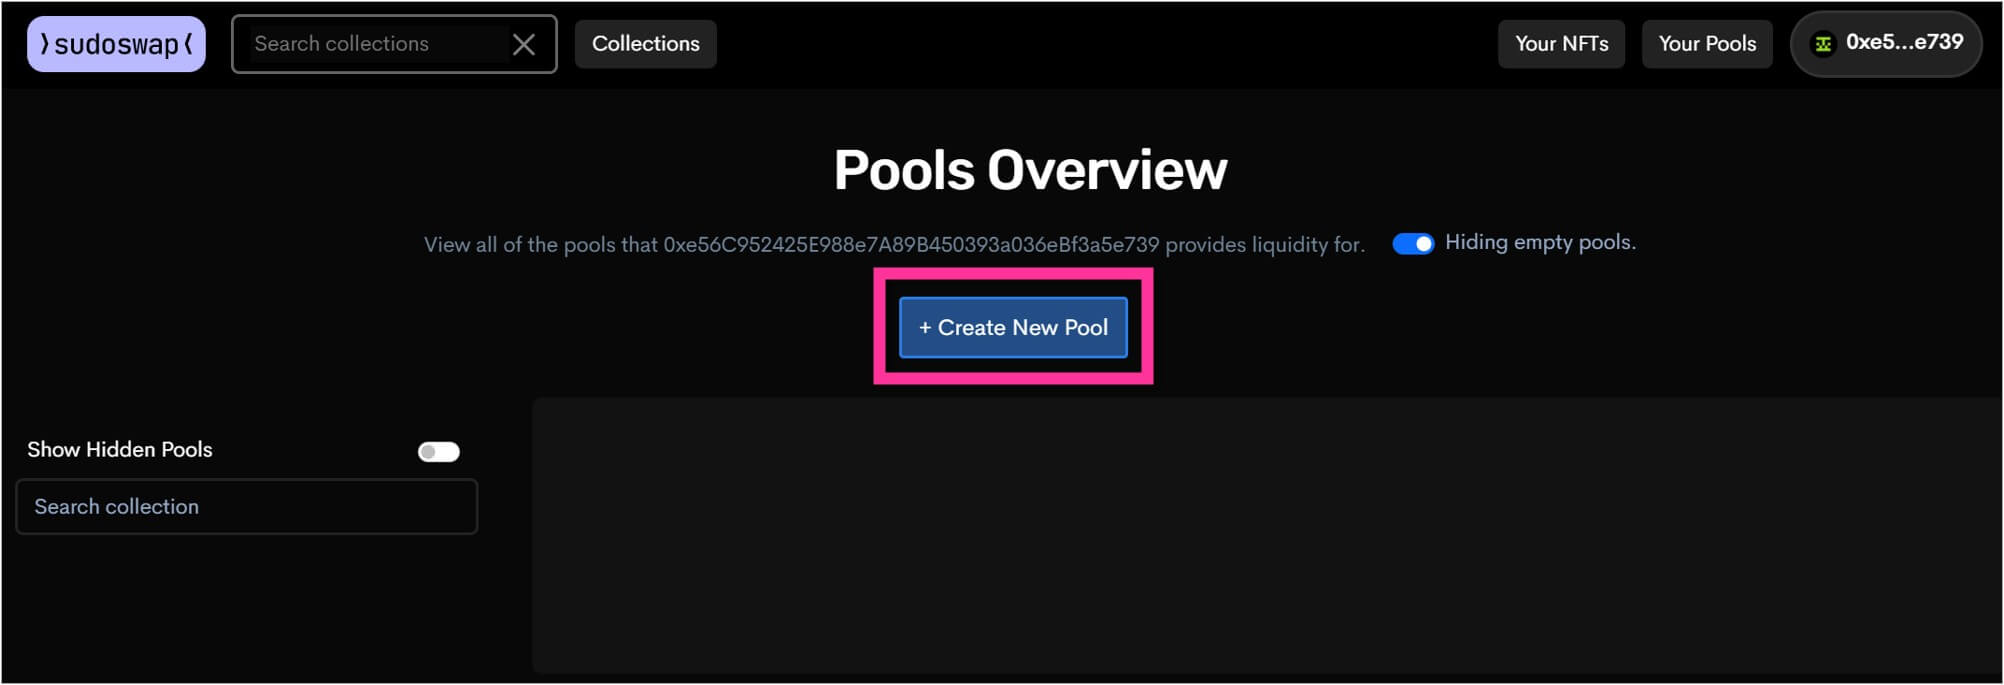 「Create New Pool」を選択